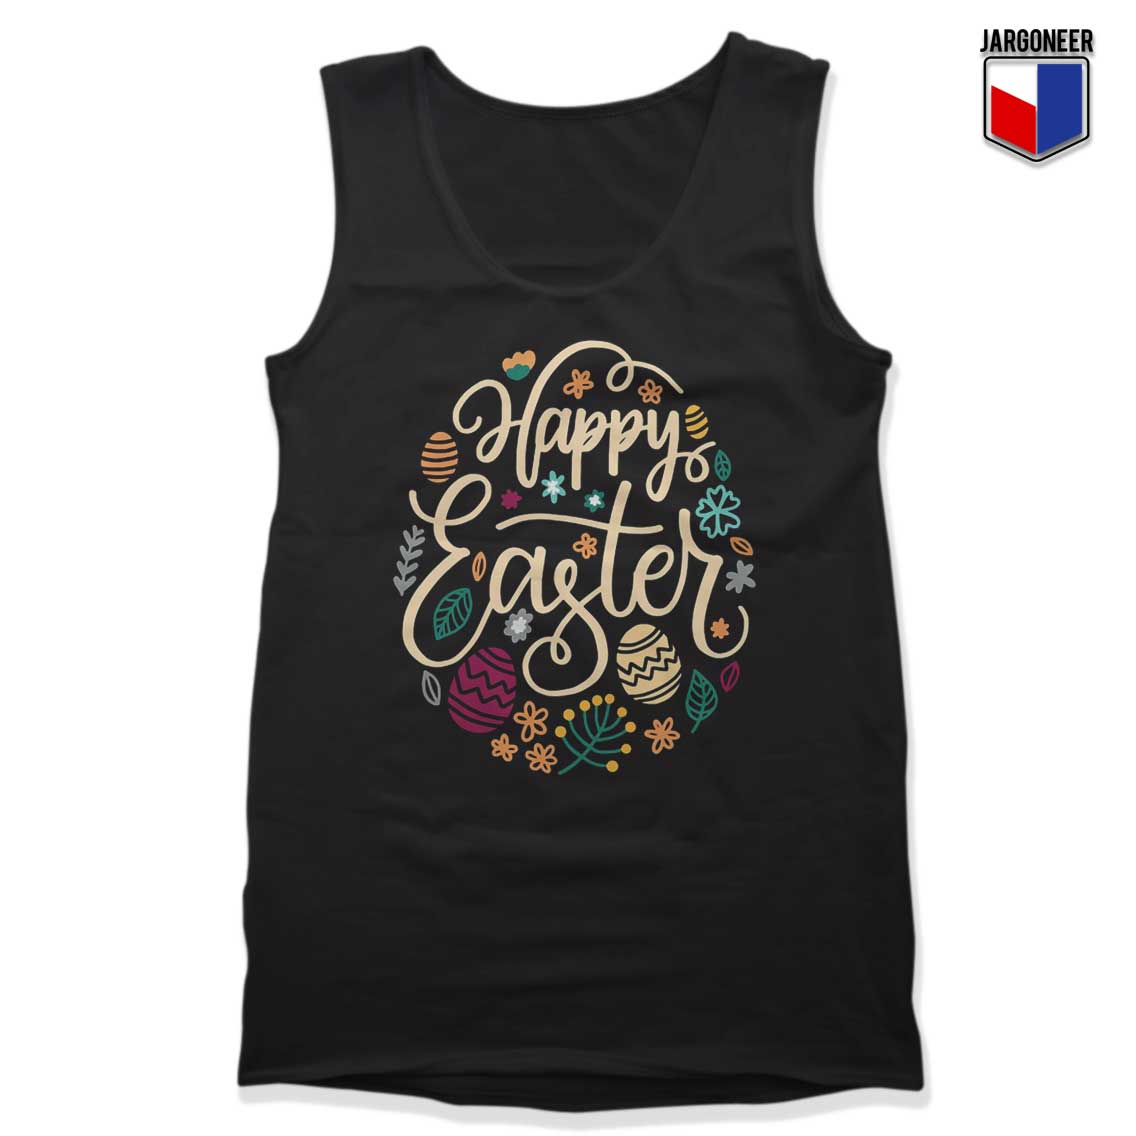 Happy Easter Flowers Tank Top - Shop Unique Graphic Cool Shirt Designs